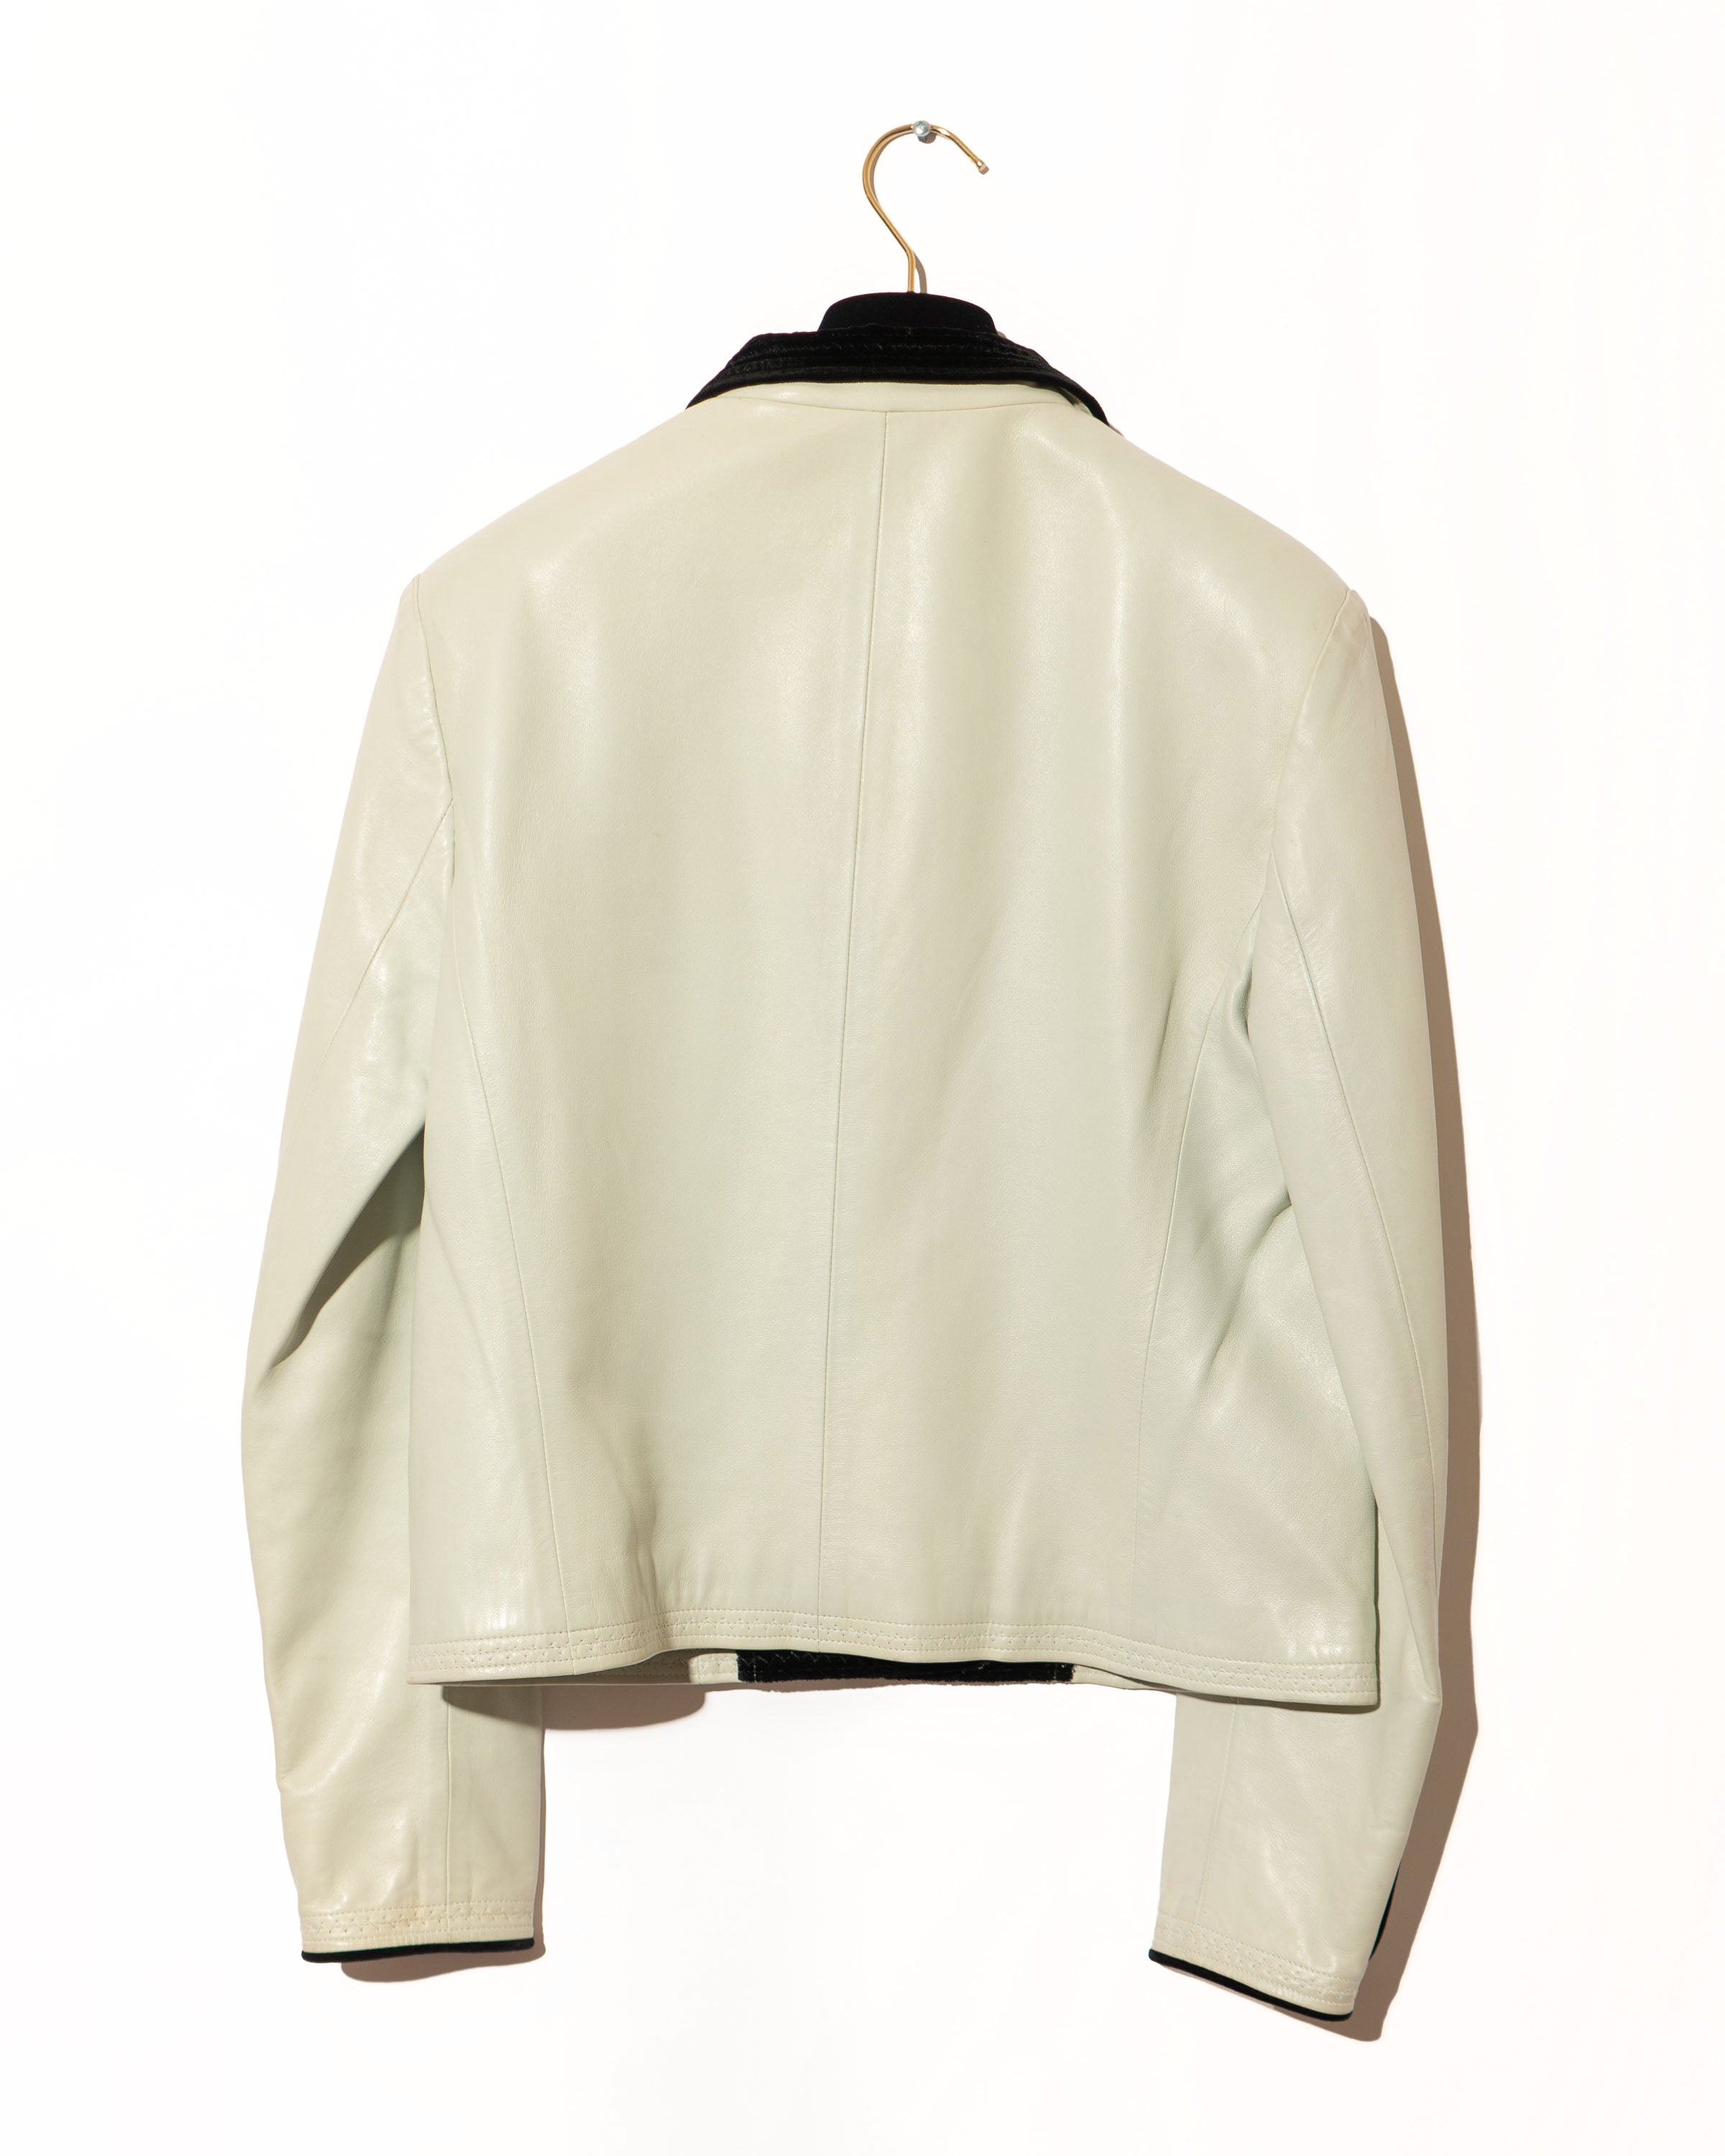 FR36-38 Rare Chanel Spring 1992 Classic Four Pocket Velvet Trim Leather  Jacket